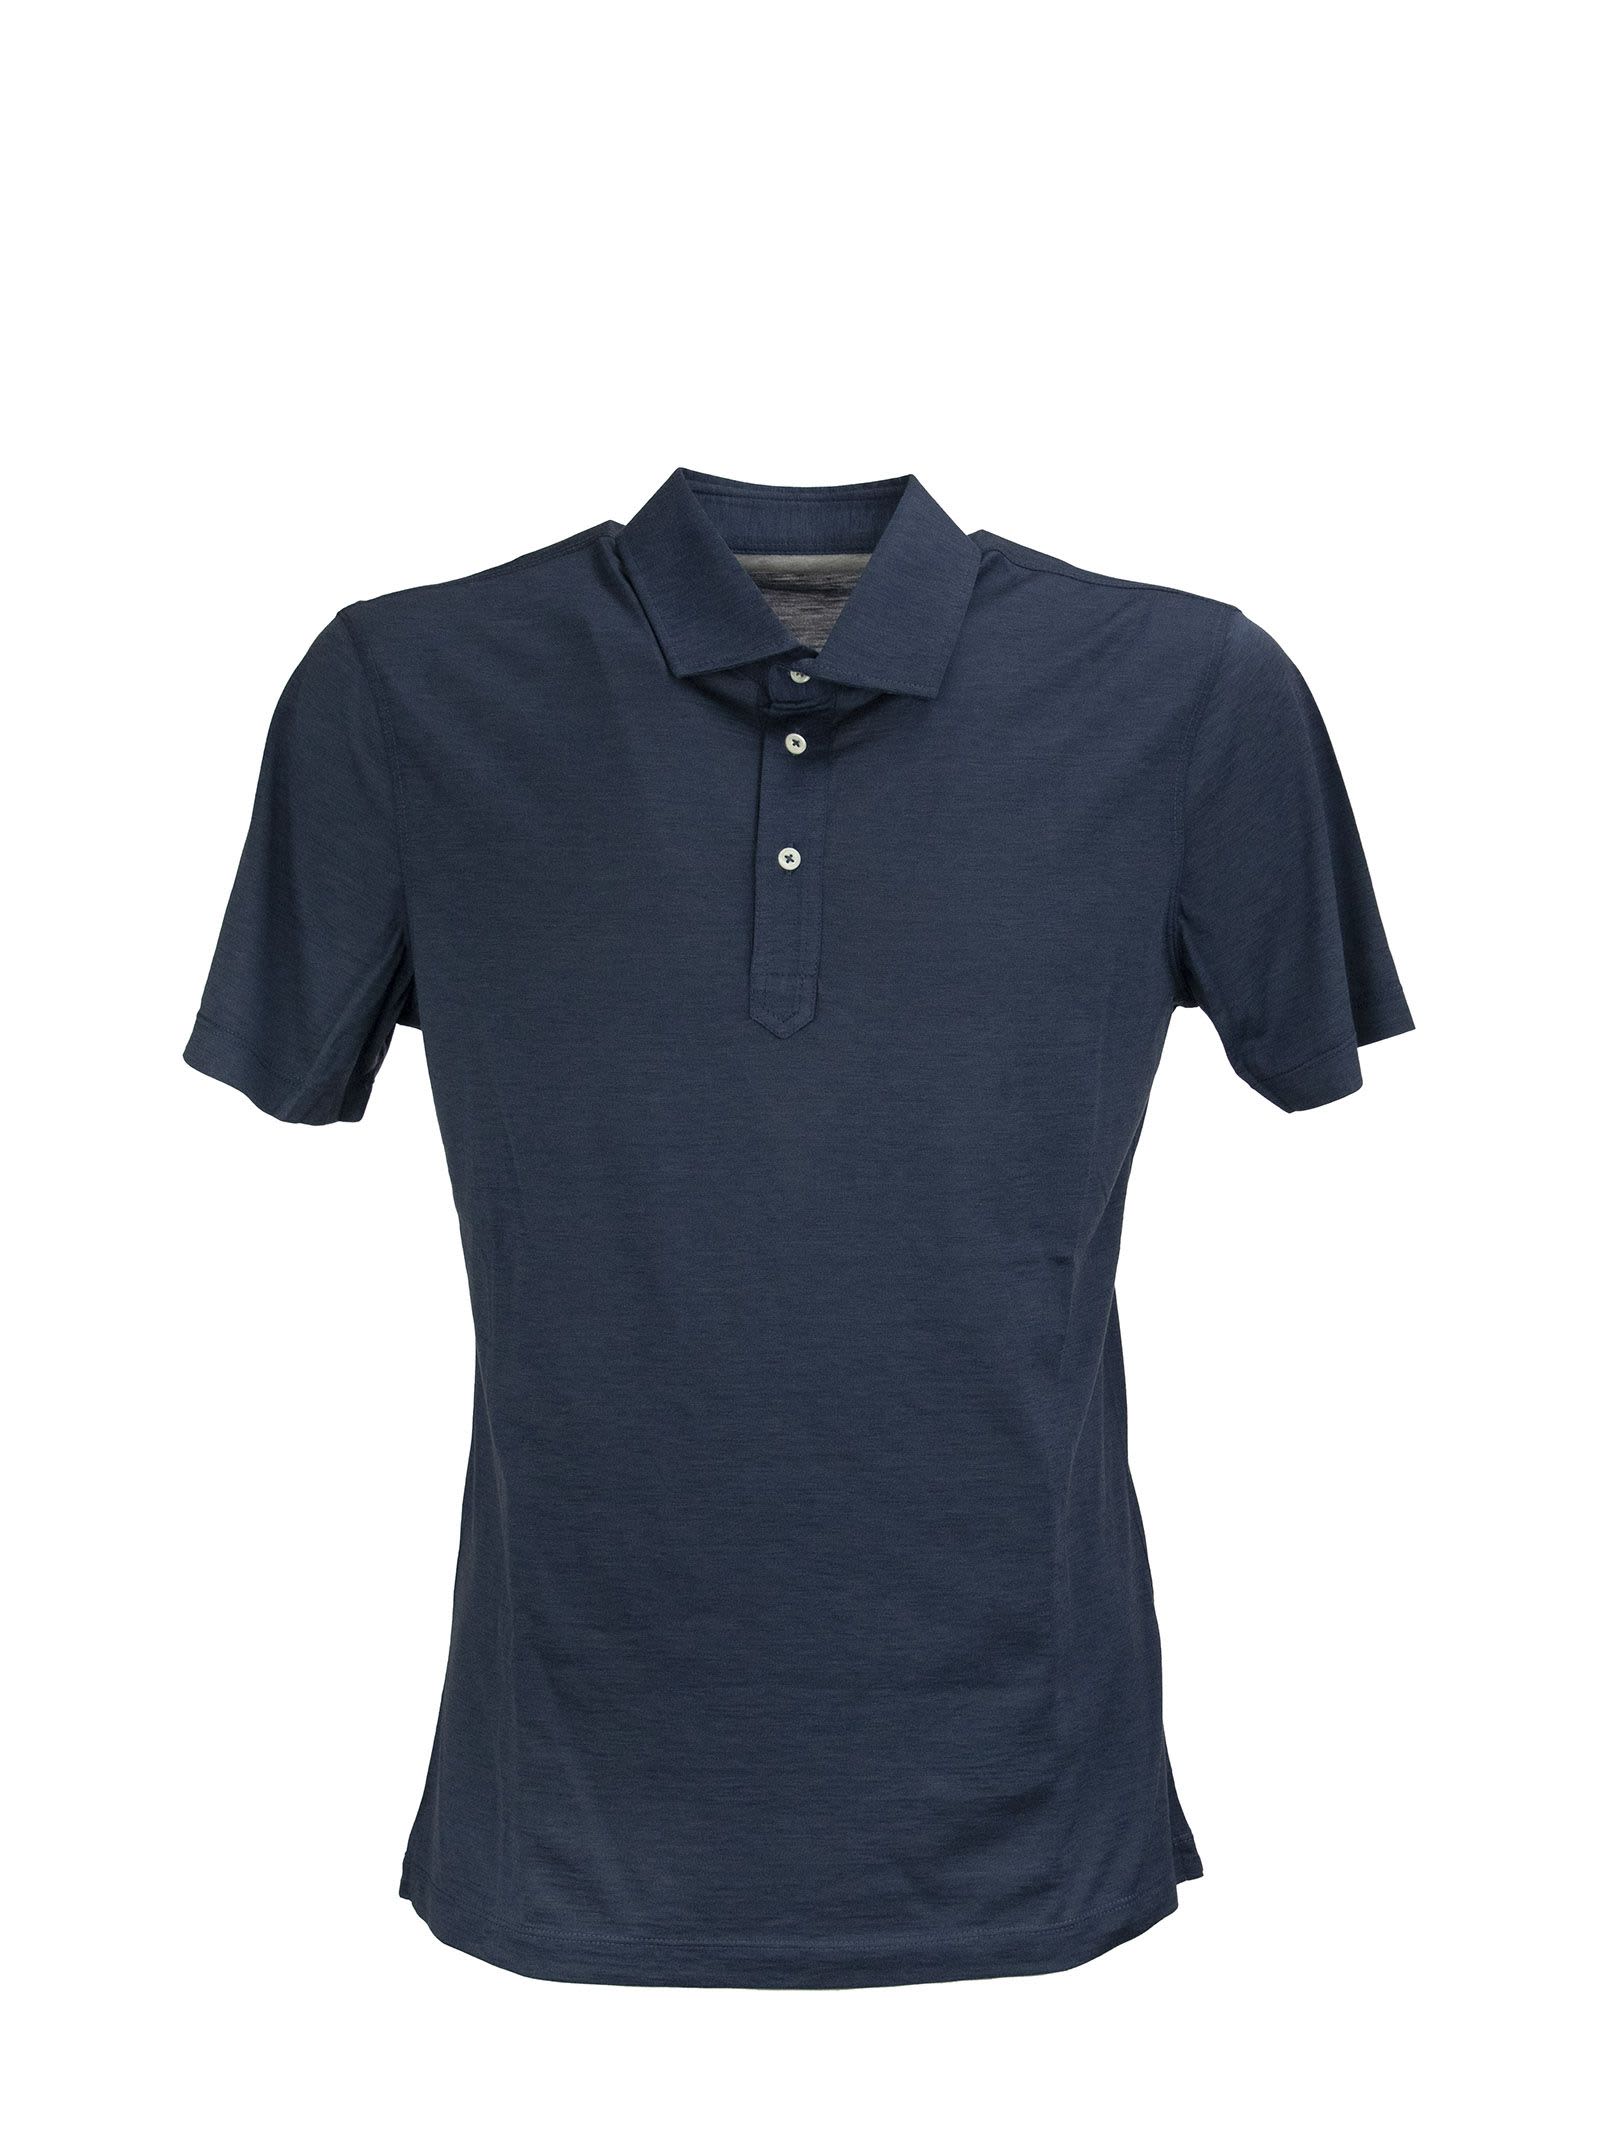 Brunello Cucinelli Cotton And Linen Slim Fit Polo Shirt